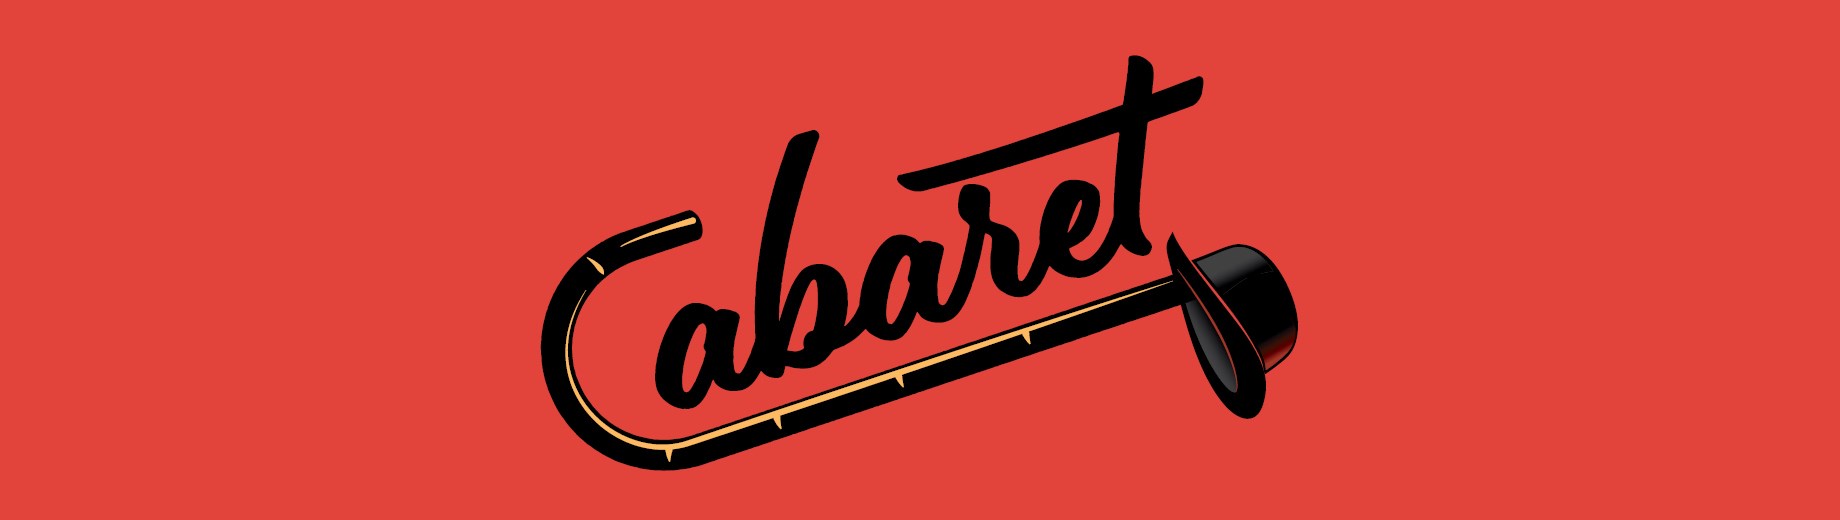 The Premiere Playhouse presents Cabaret